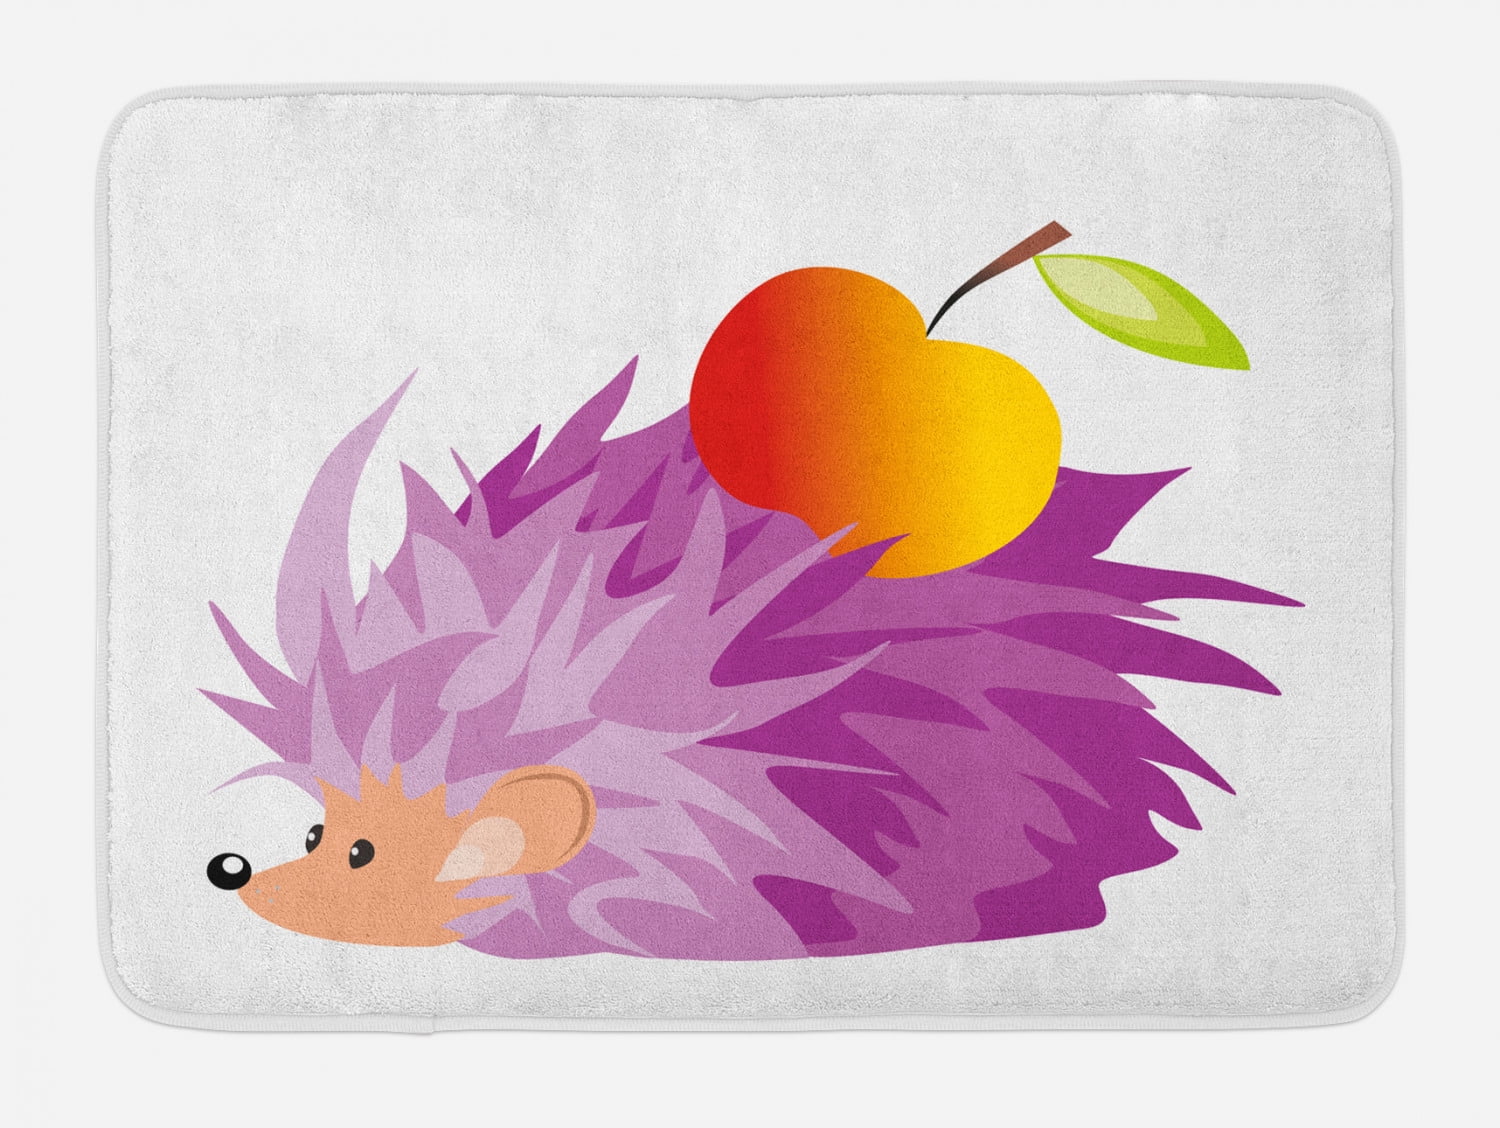 【81%OFF!】 Cute Hedgehog Animal Bath Rugs Absorbent Non Slip Door Mats Soft